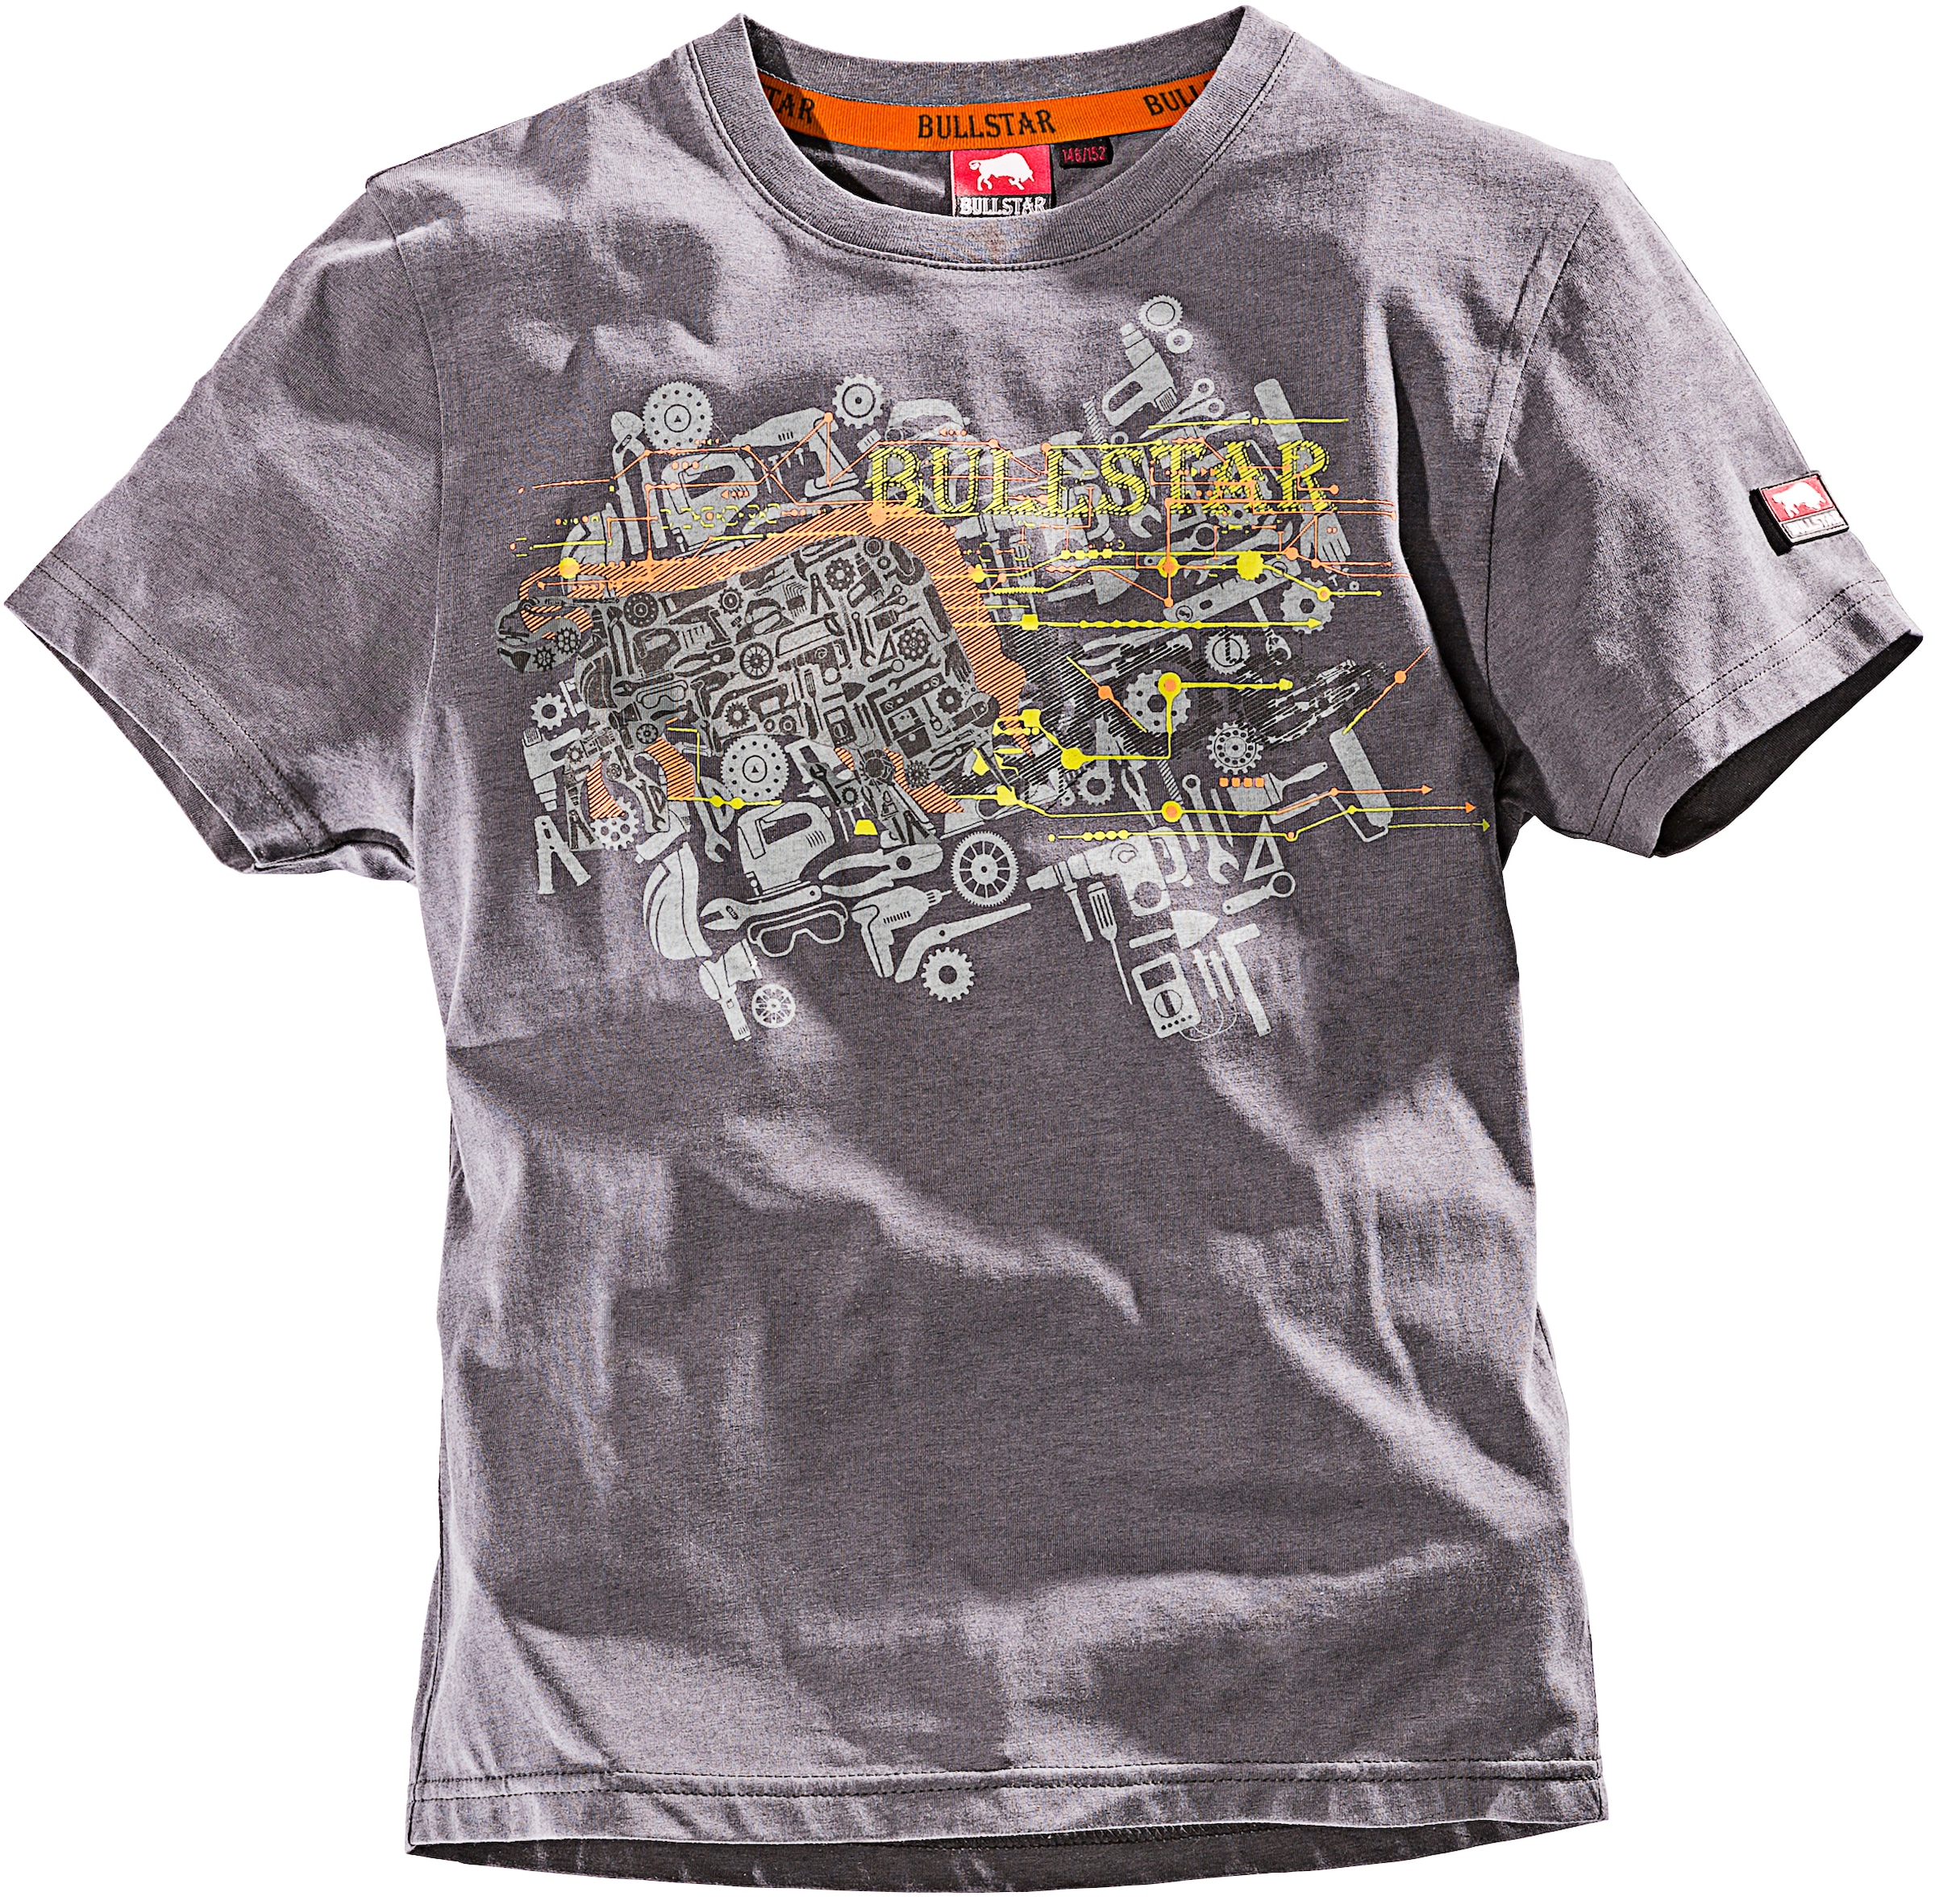 Bullstar T-Shirt bei online für OTTO »Ultra«, Kinder